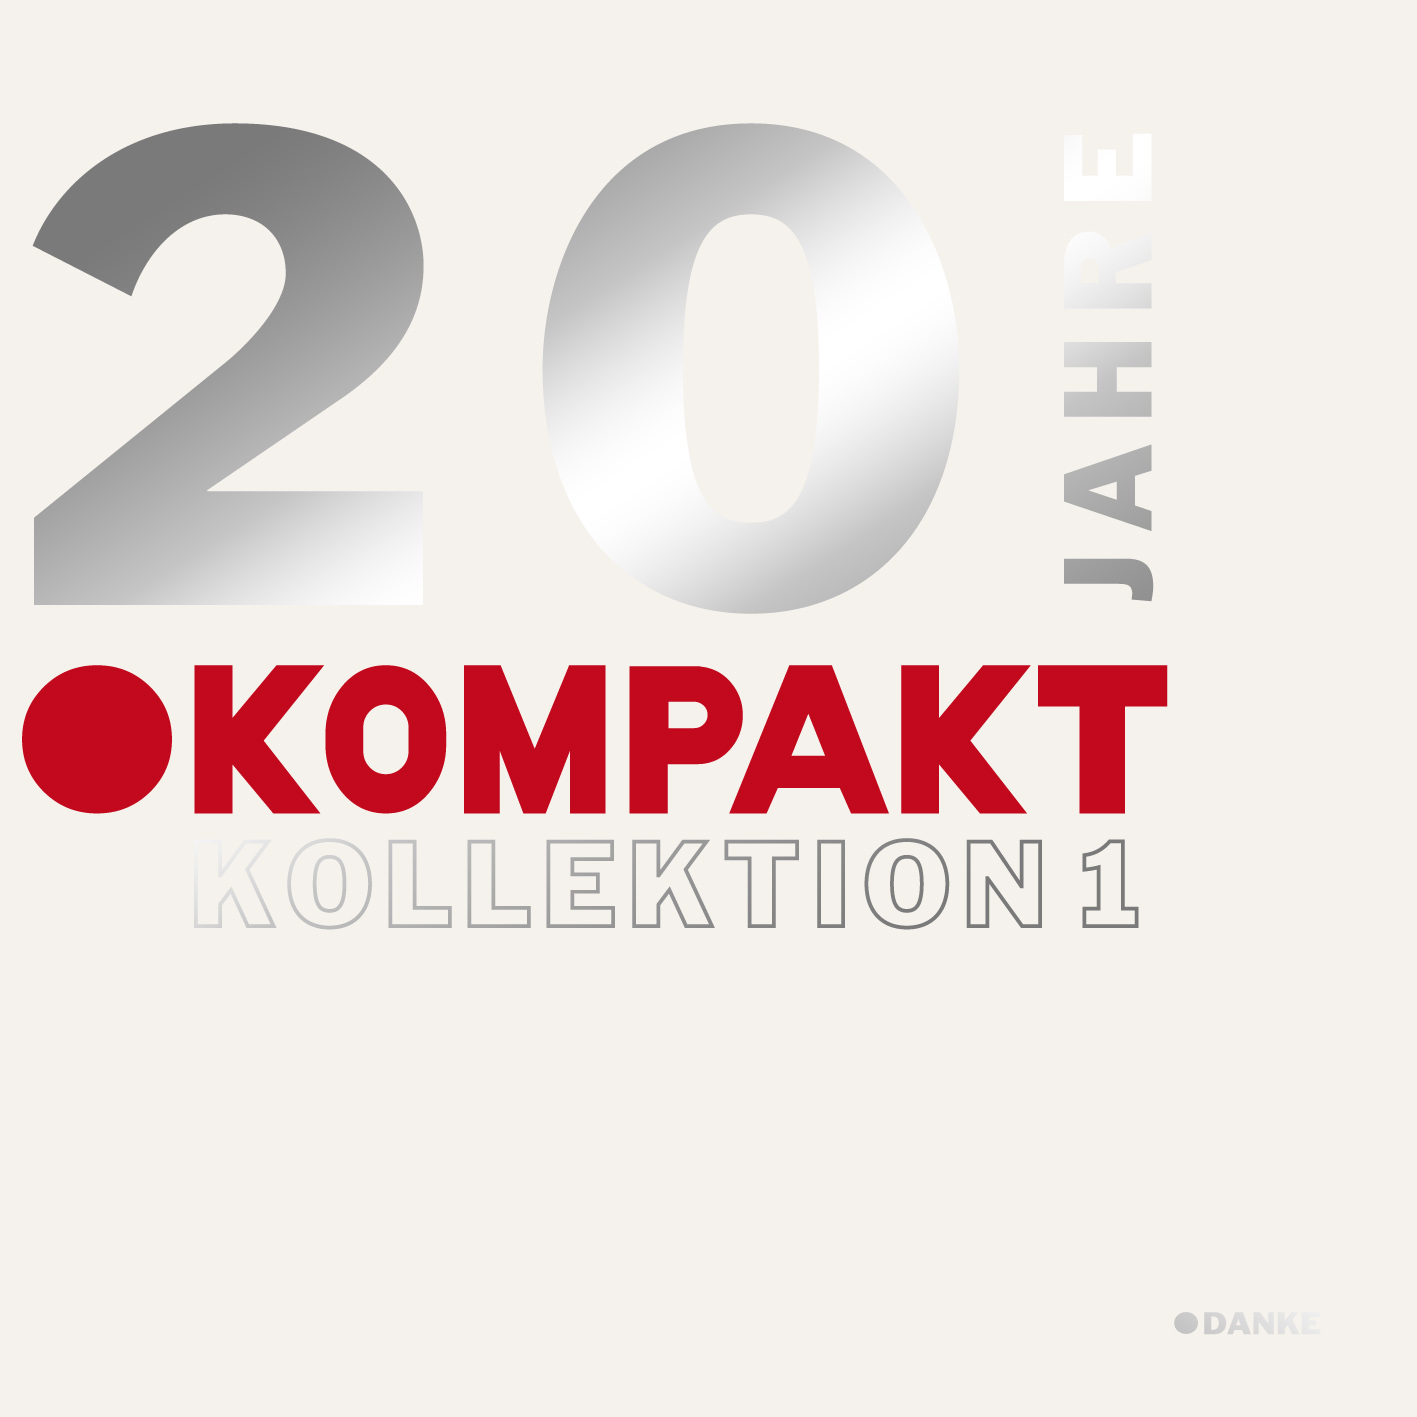 20 years of Kompakt - Compilation